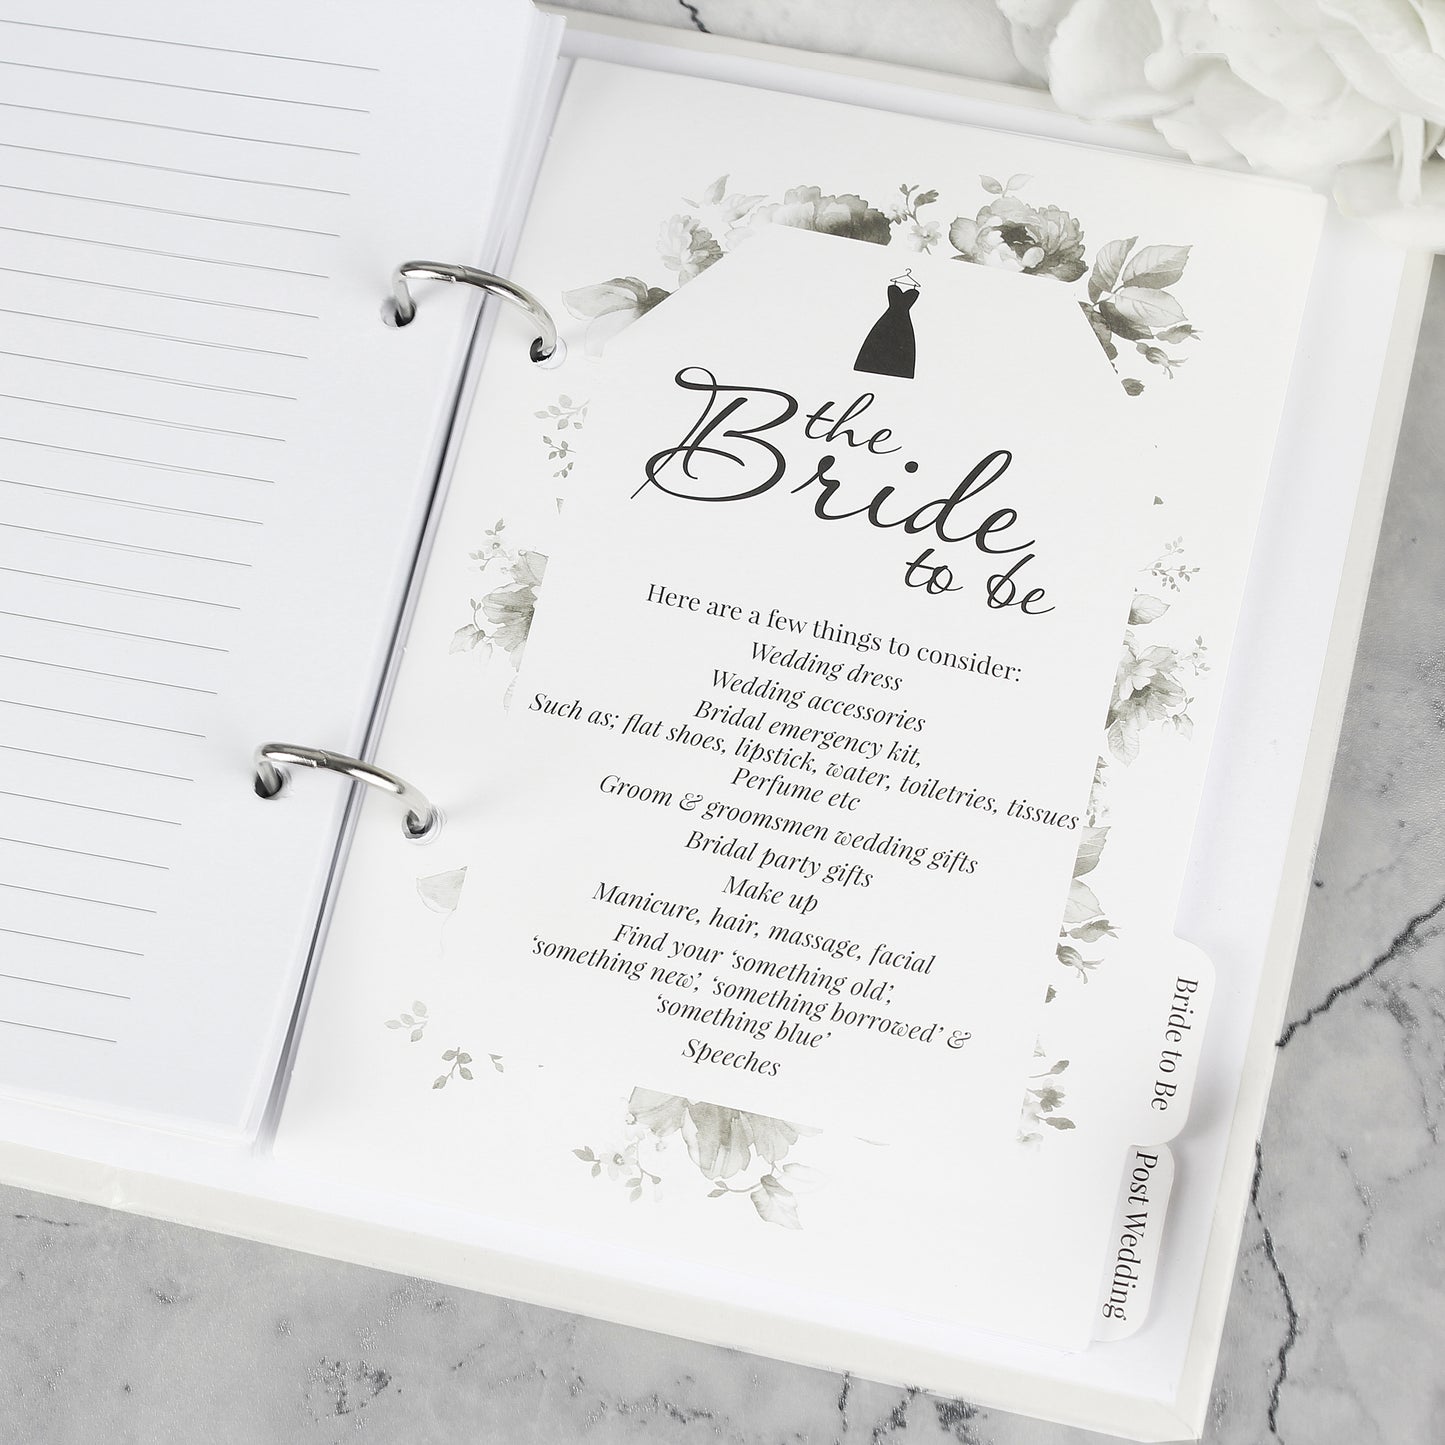 Bride to be checklist in wedding planner